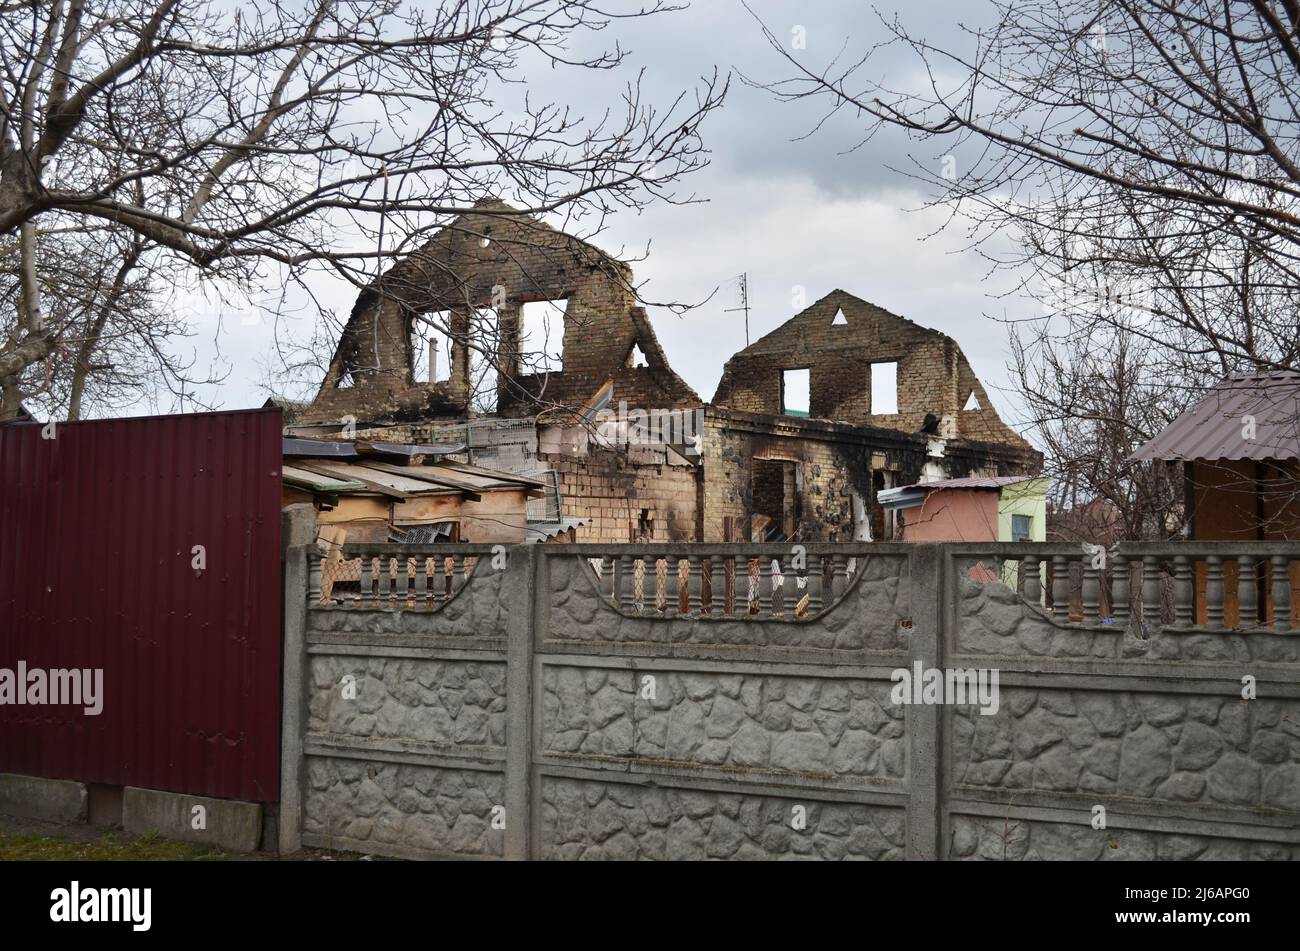 Myla, Kyiv region, Ukraine - April 11, 2022: Destroyed private house in Myla village near Zhytomyr highway during the Russian invasion of Ukraine. Stock Photo